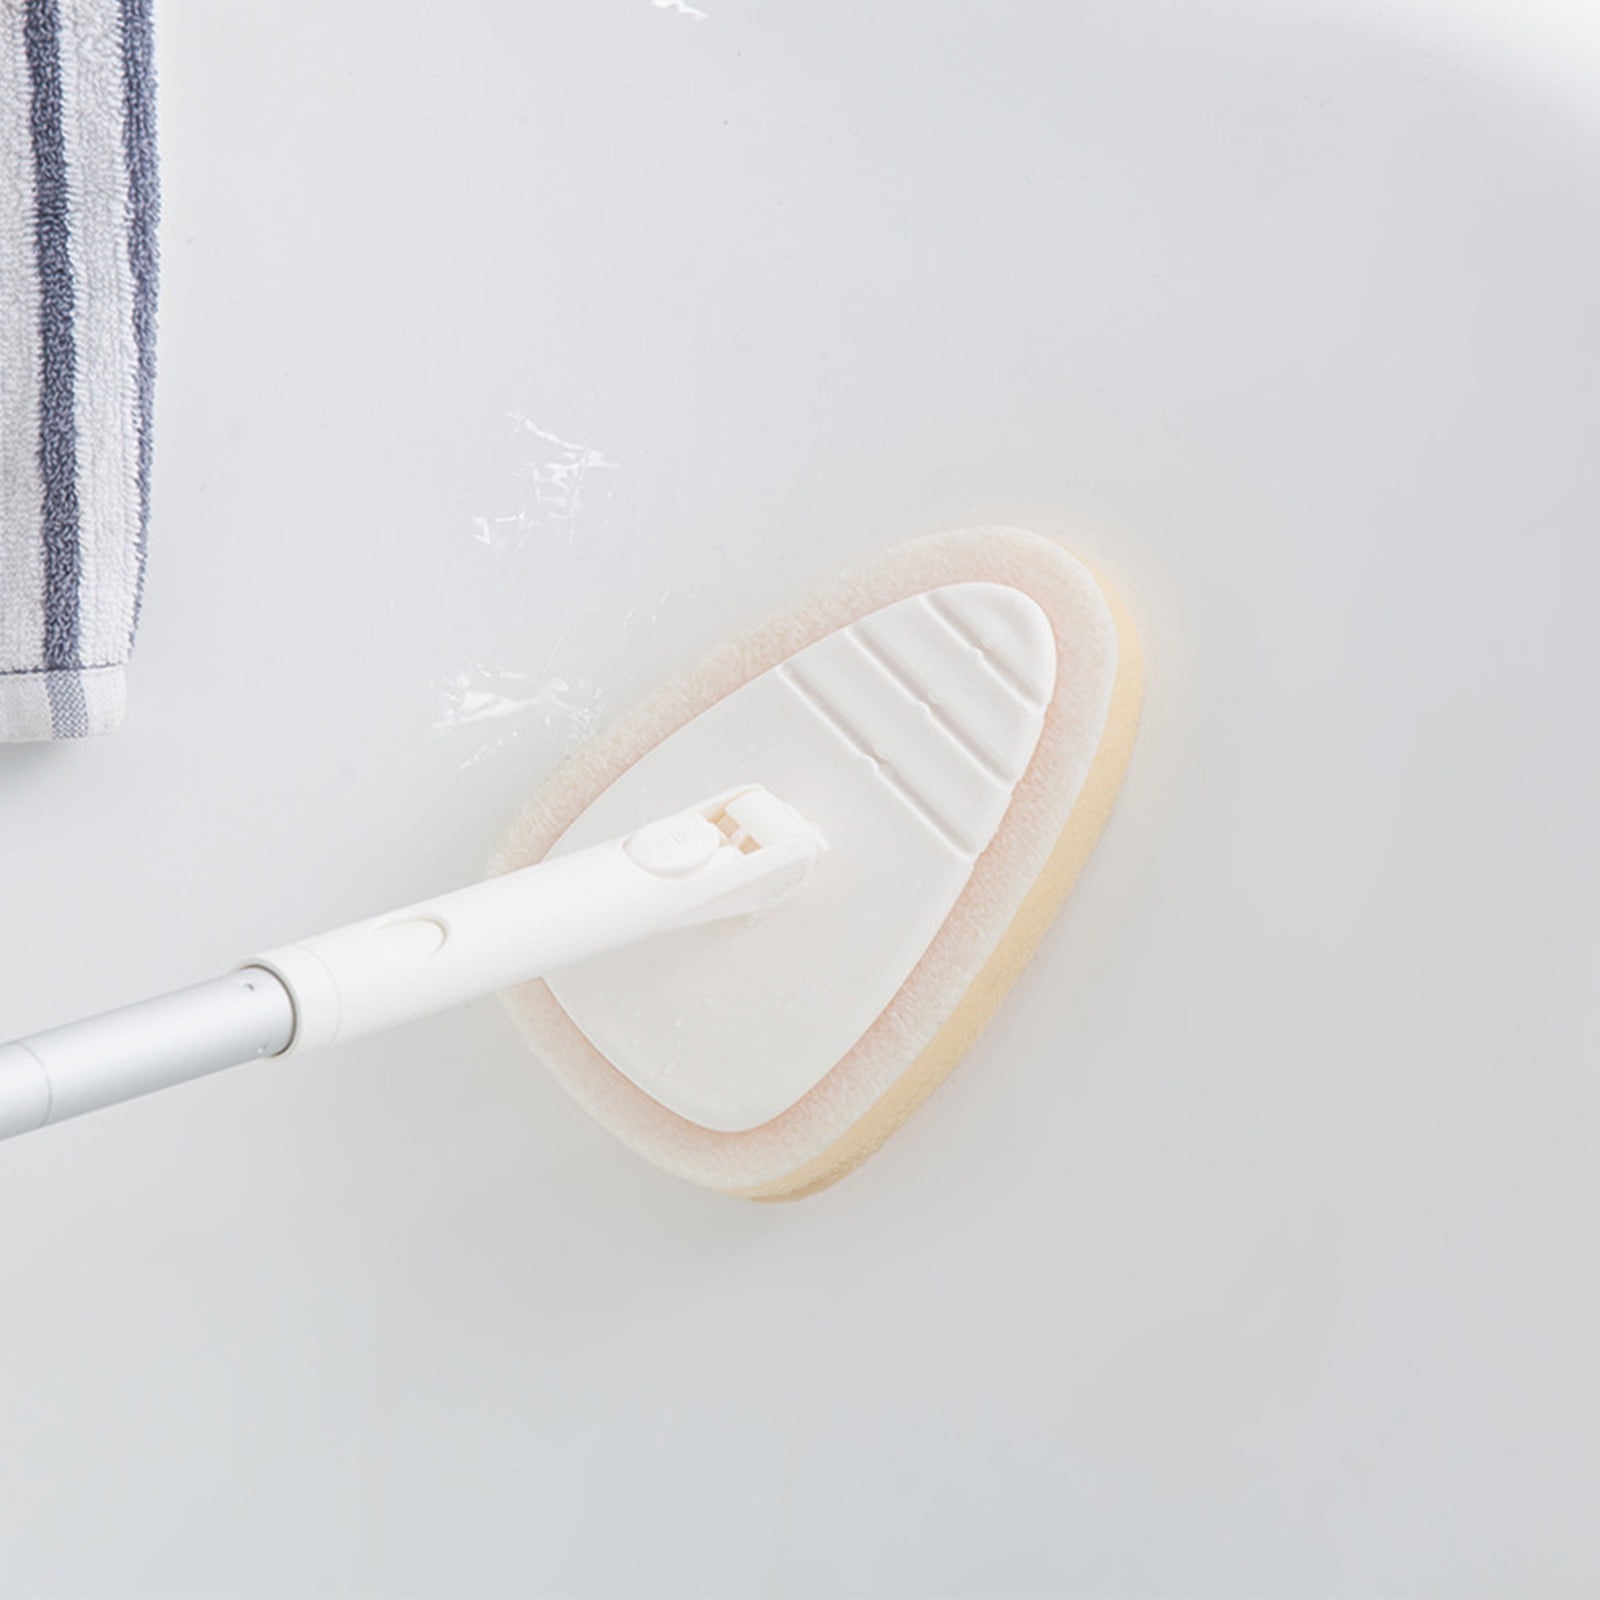 QIIBURR Toilet Cleaner Brush Bathroom Cleaner Brush Tub Tile Cleaner Brush  with Long Handle ,Shower Brush Cleaner Toolfor Bathroom Bathtub Toilet  Floor Kitchen Baseboard Cleaner 